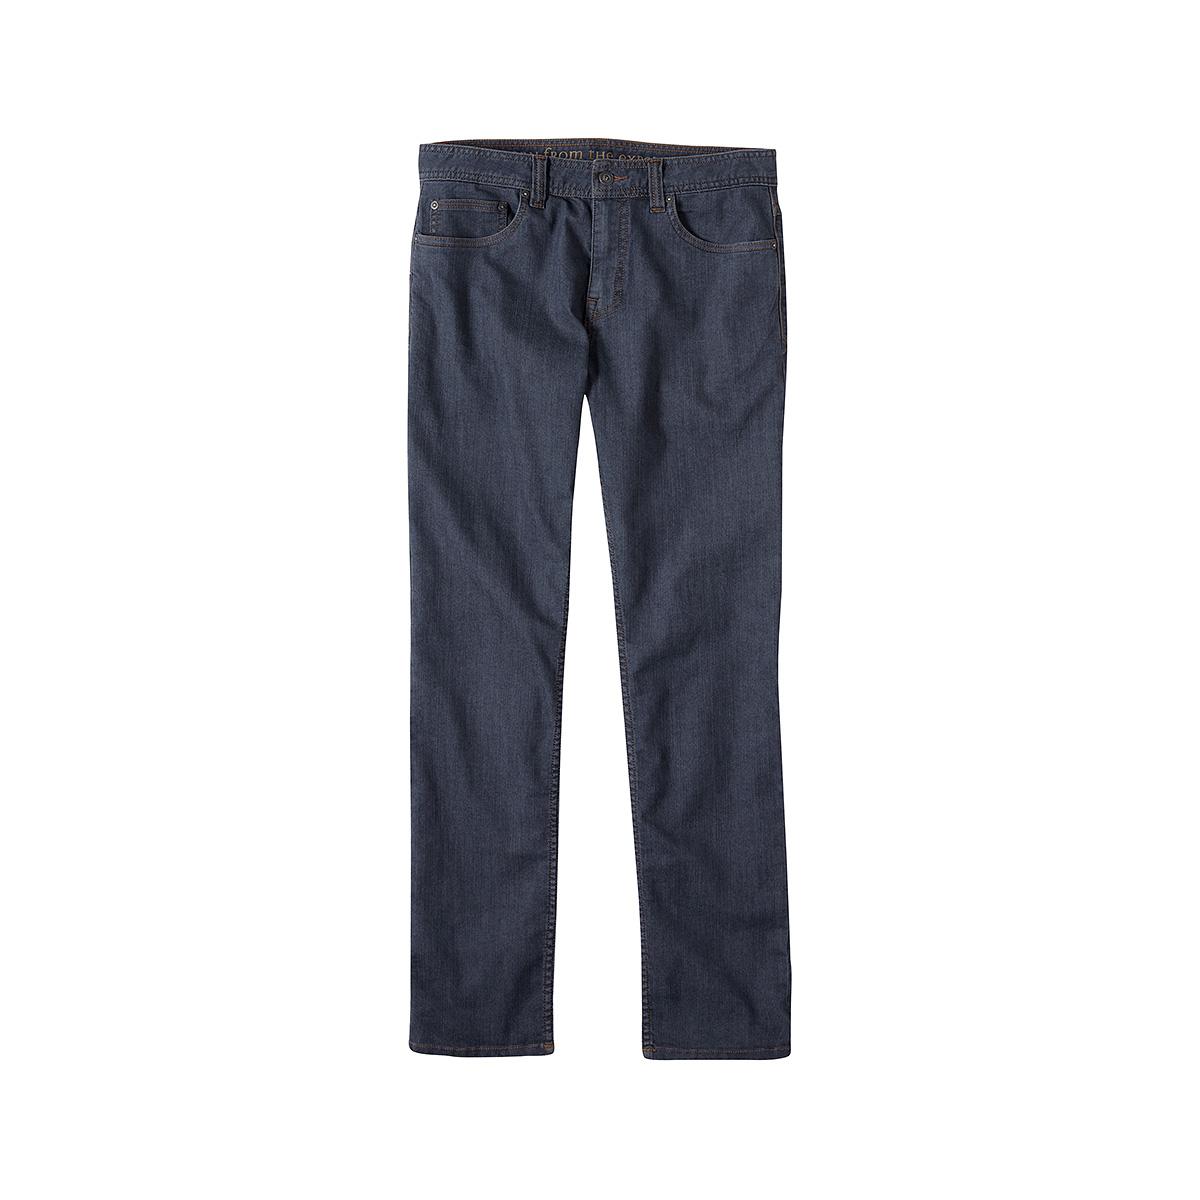  Men's Bridger Jeans - 34 Inch